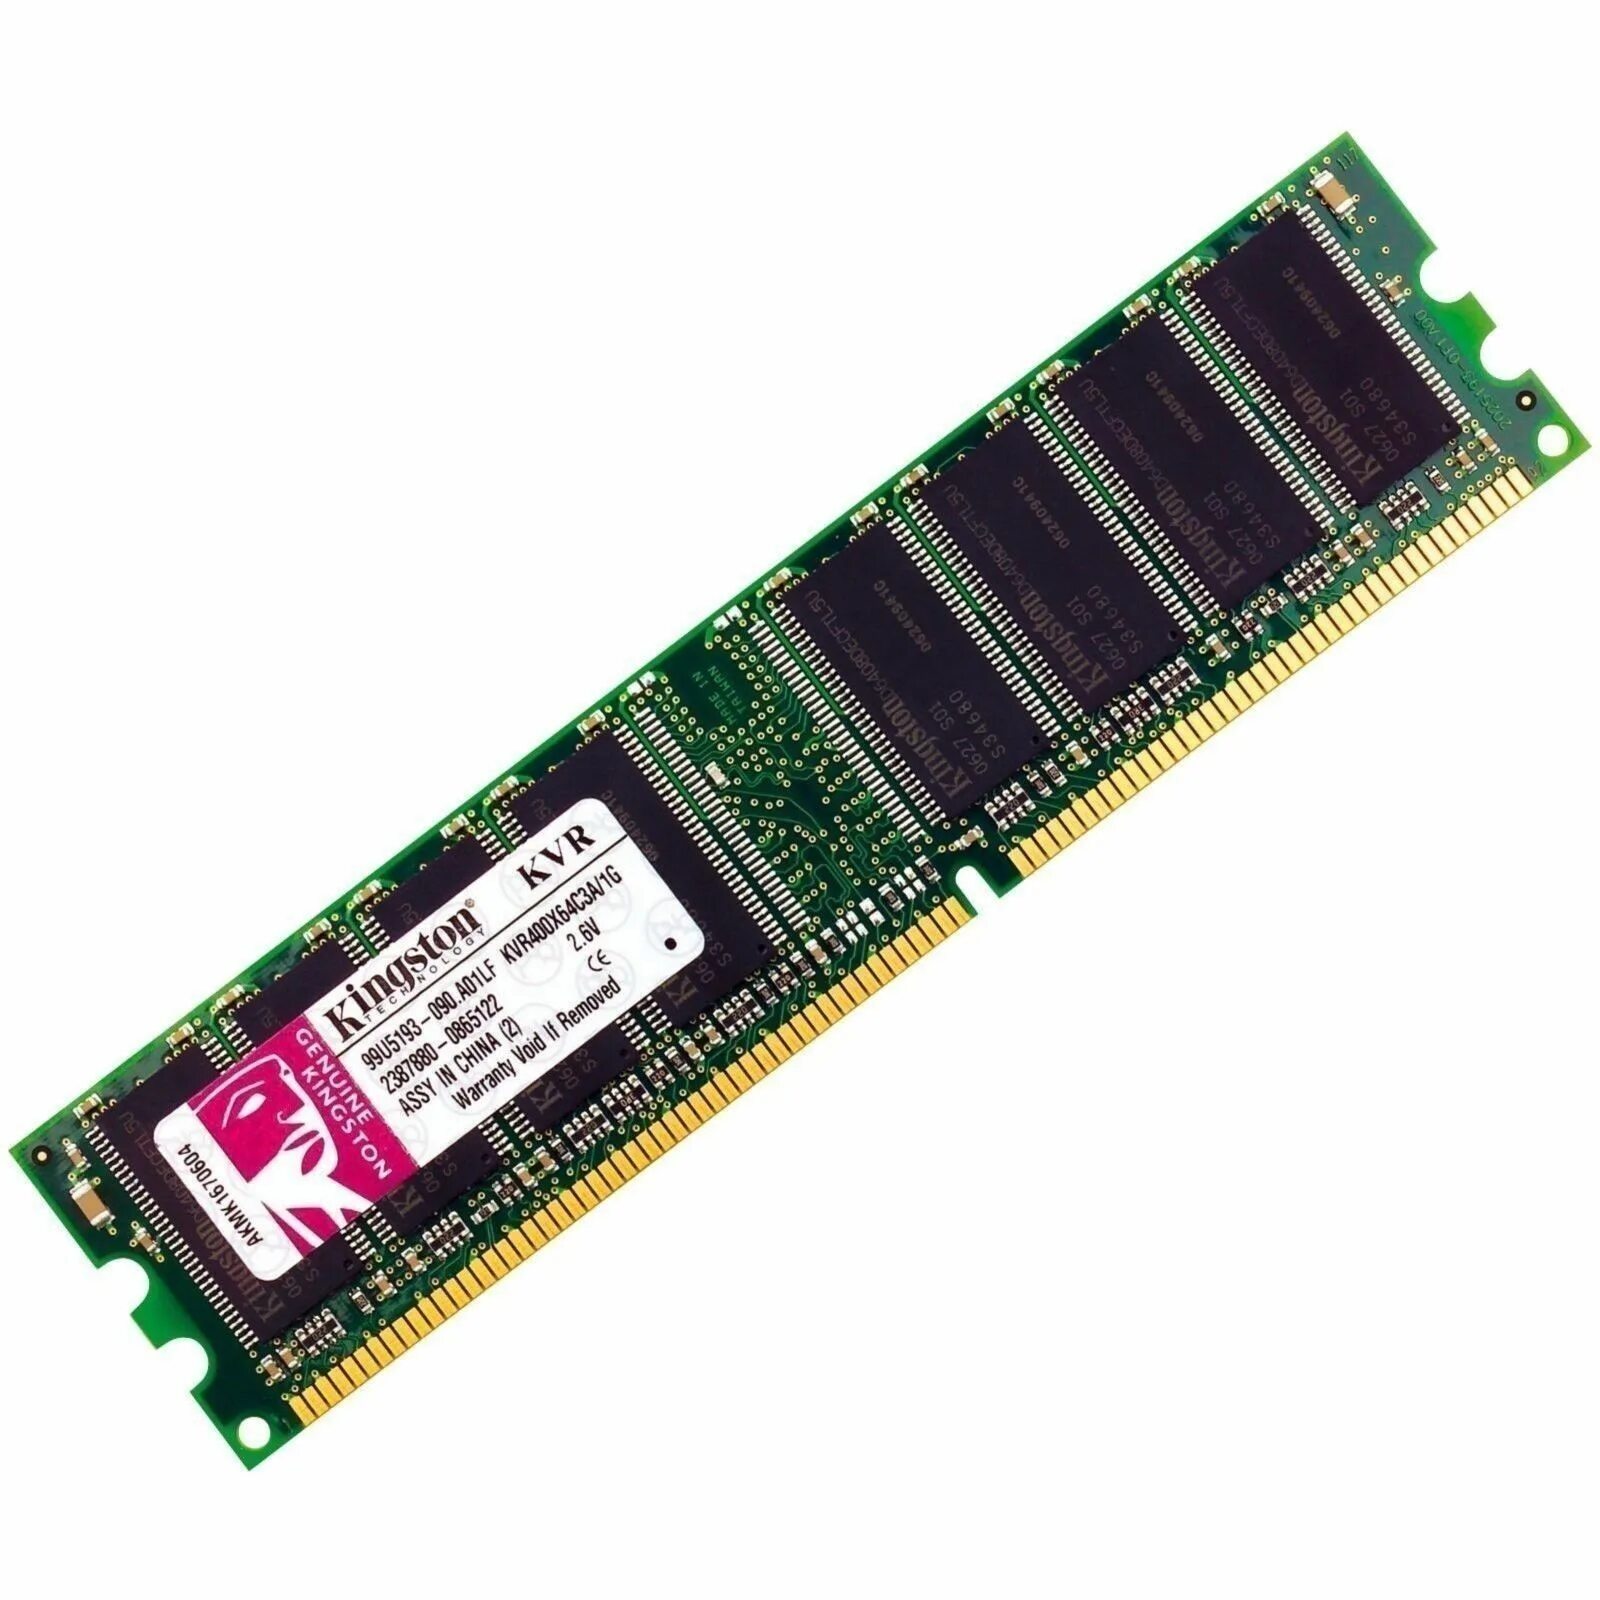 Kingston kvr400x64c3a/1g. Kvr400x64c3a/1g. Оперативная память DDR 400 MHZ. Оперативная память 1 ГБ 1 шт. Kingmax DDR 400 so-DIMM 1 GB. Ddr4 максимальная память